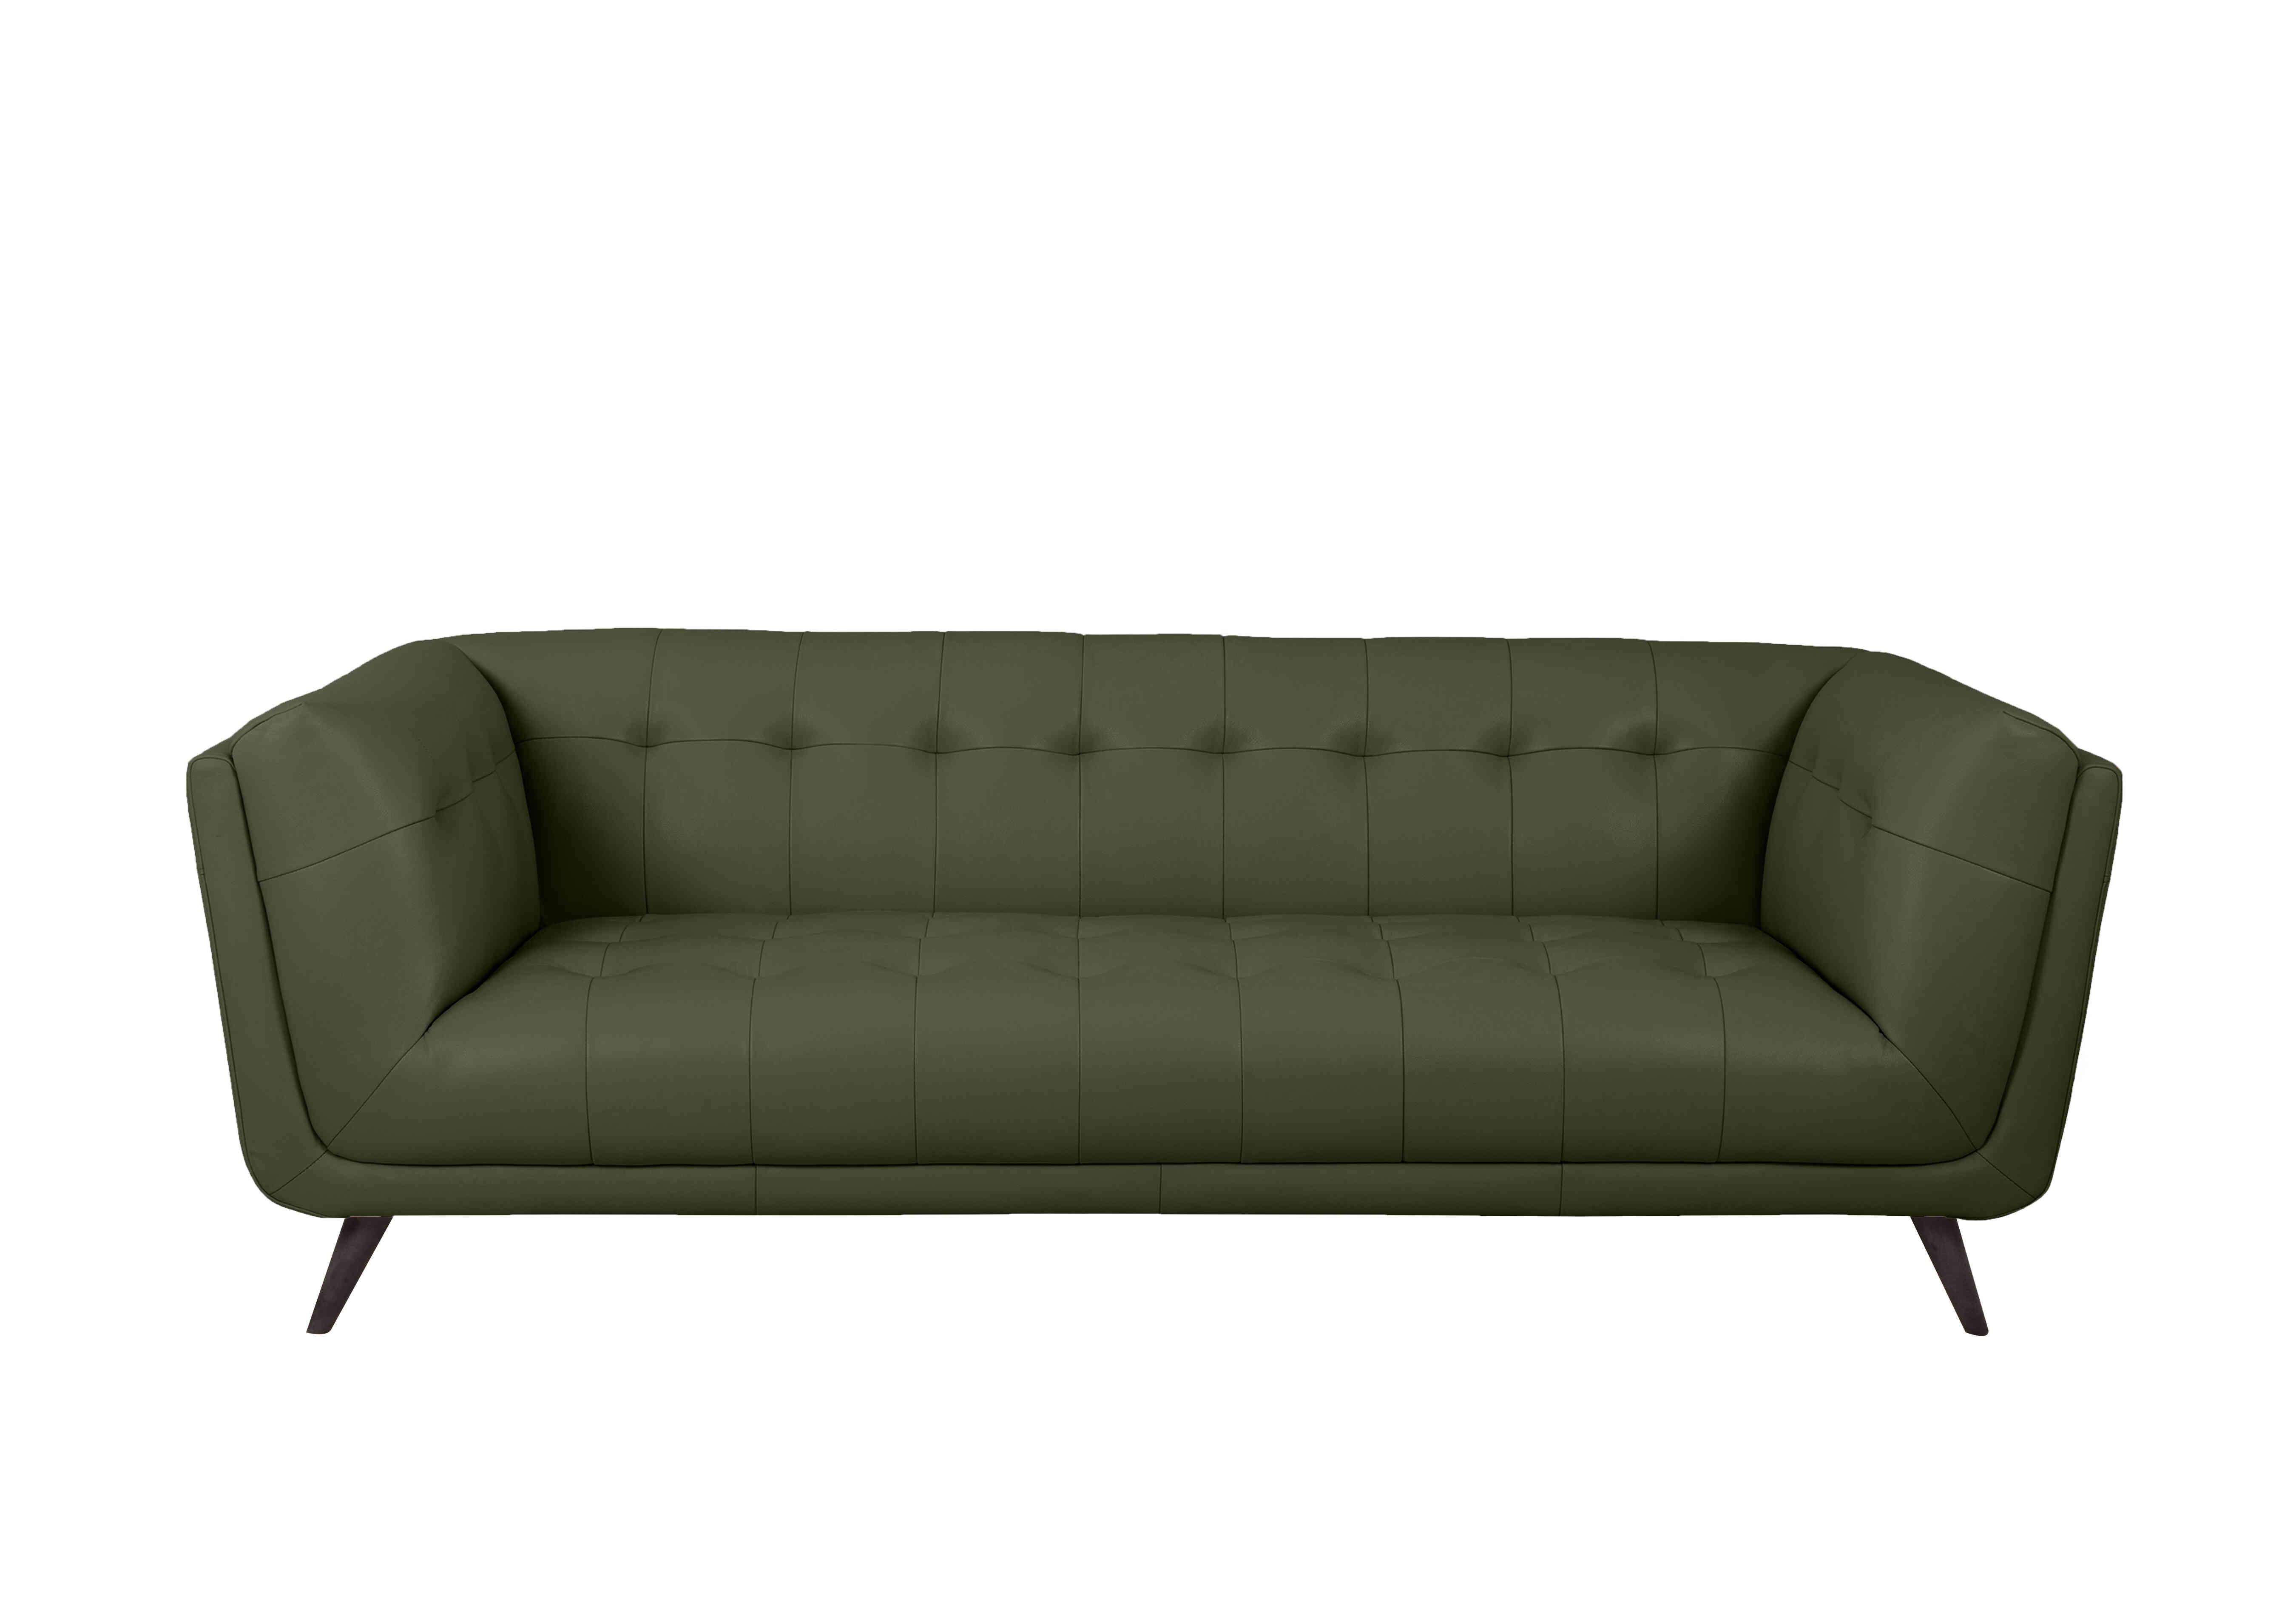 Rene 3 Seater Leather Sofa in Montana Oslo Pine on Furniture Village